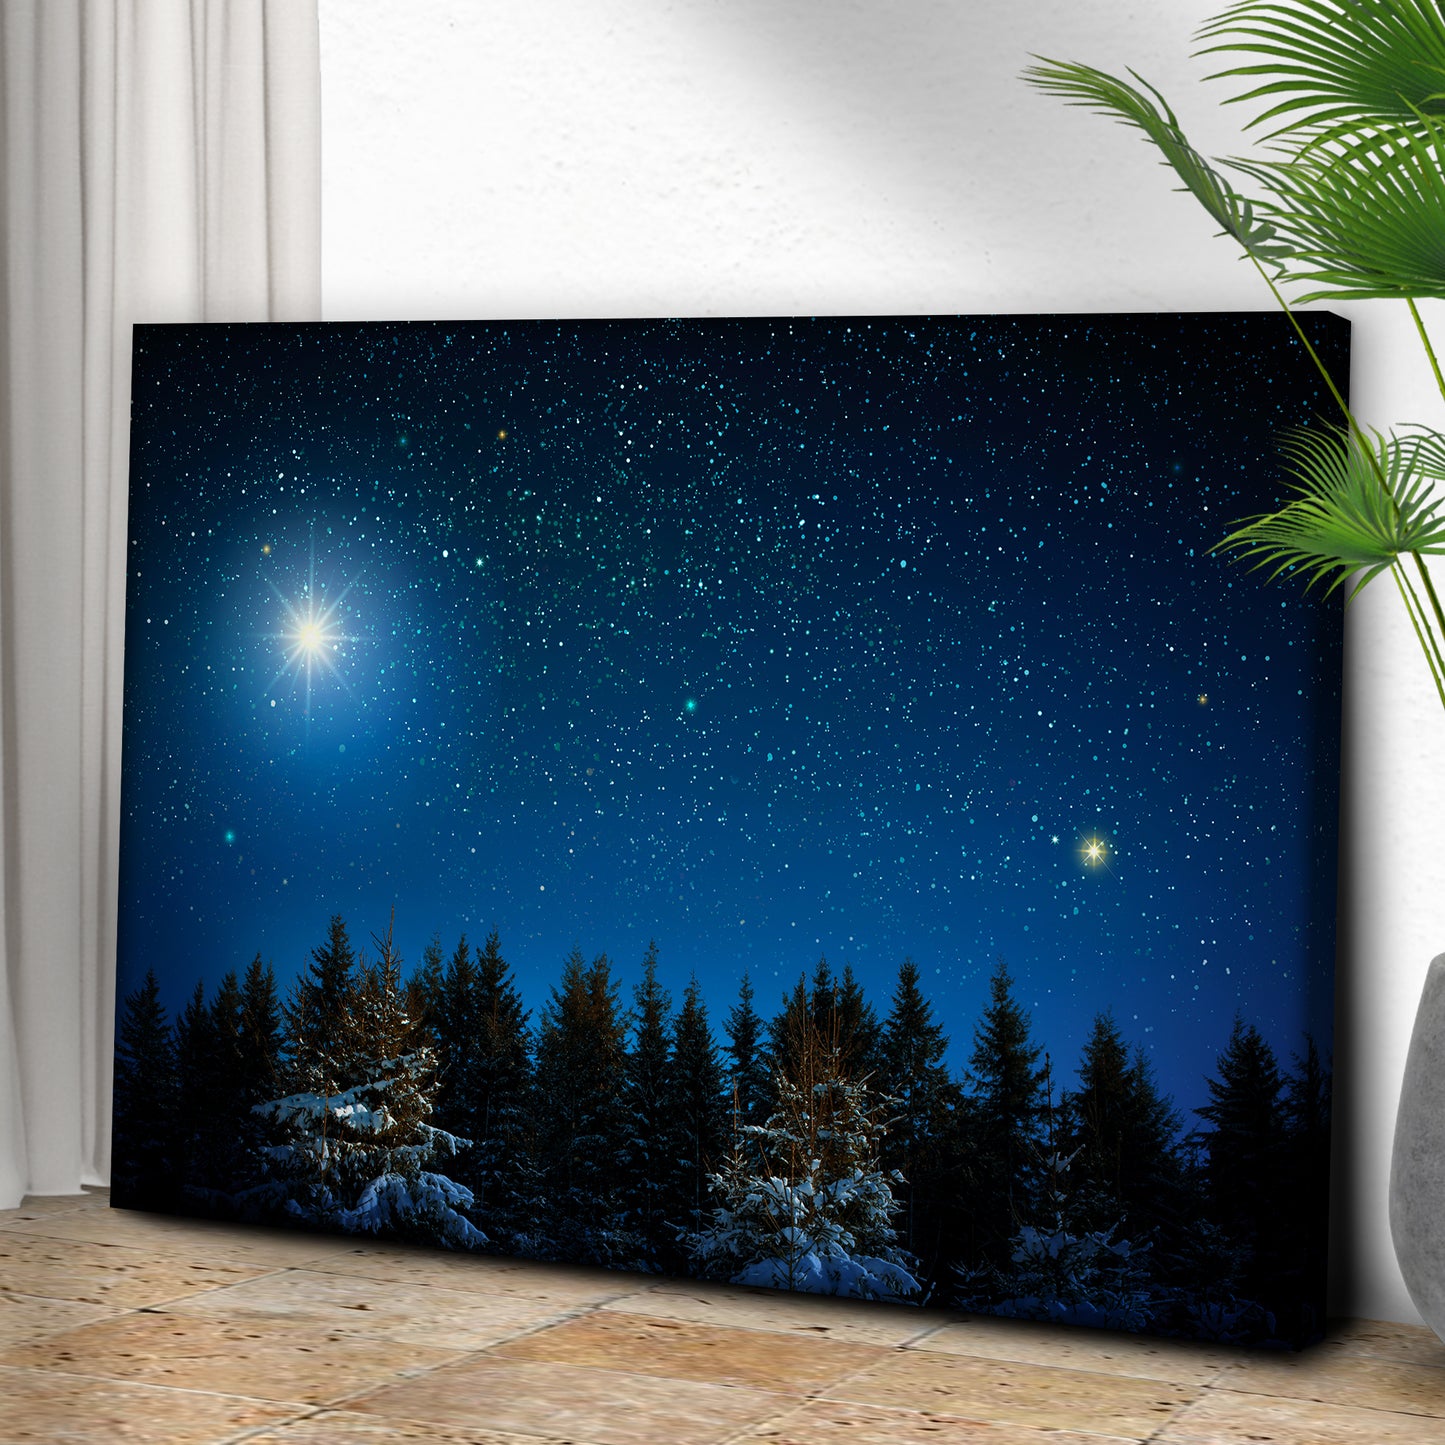 Planet Neptune Solar System Canvas Wall Art  - Image by Tailored Canvases Style 1  - Image by Tailored Canvases